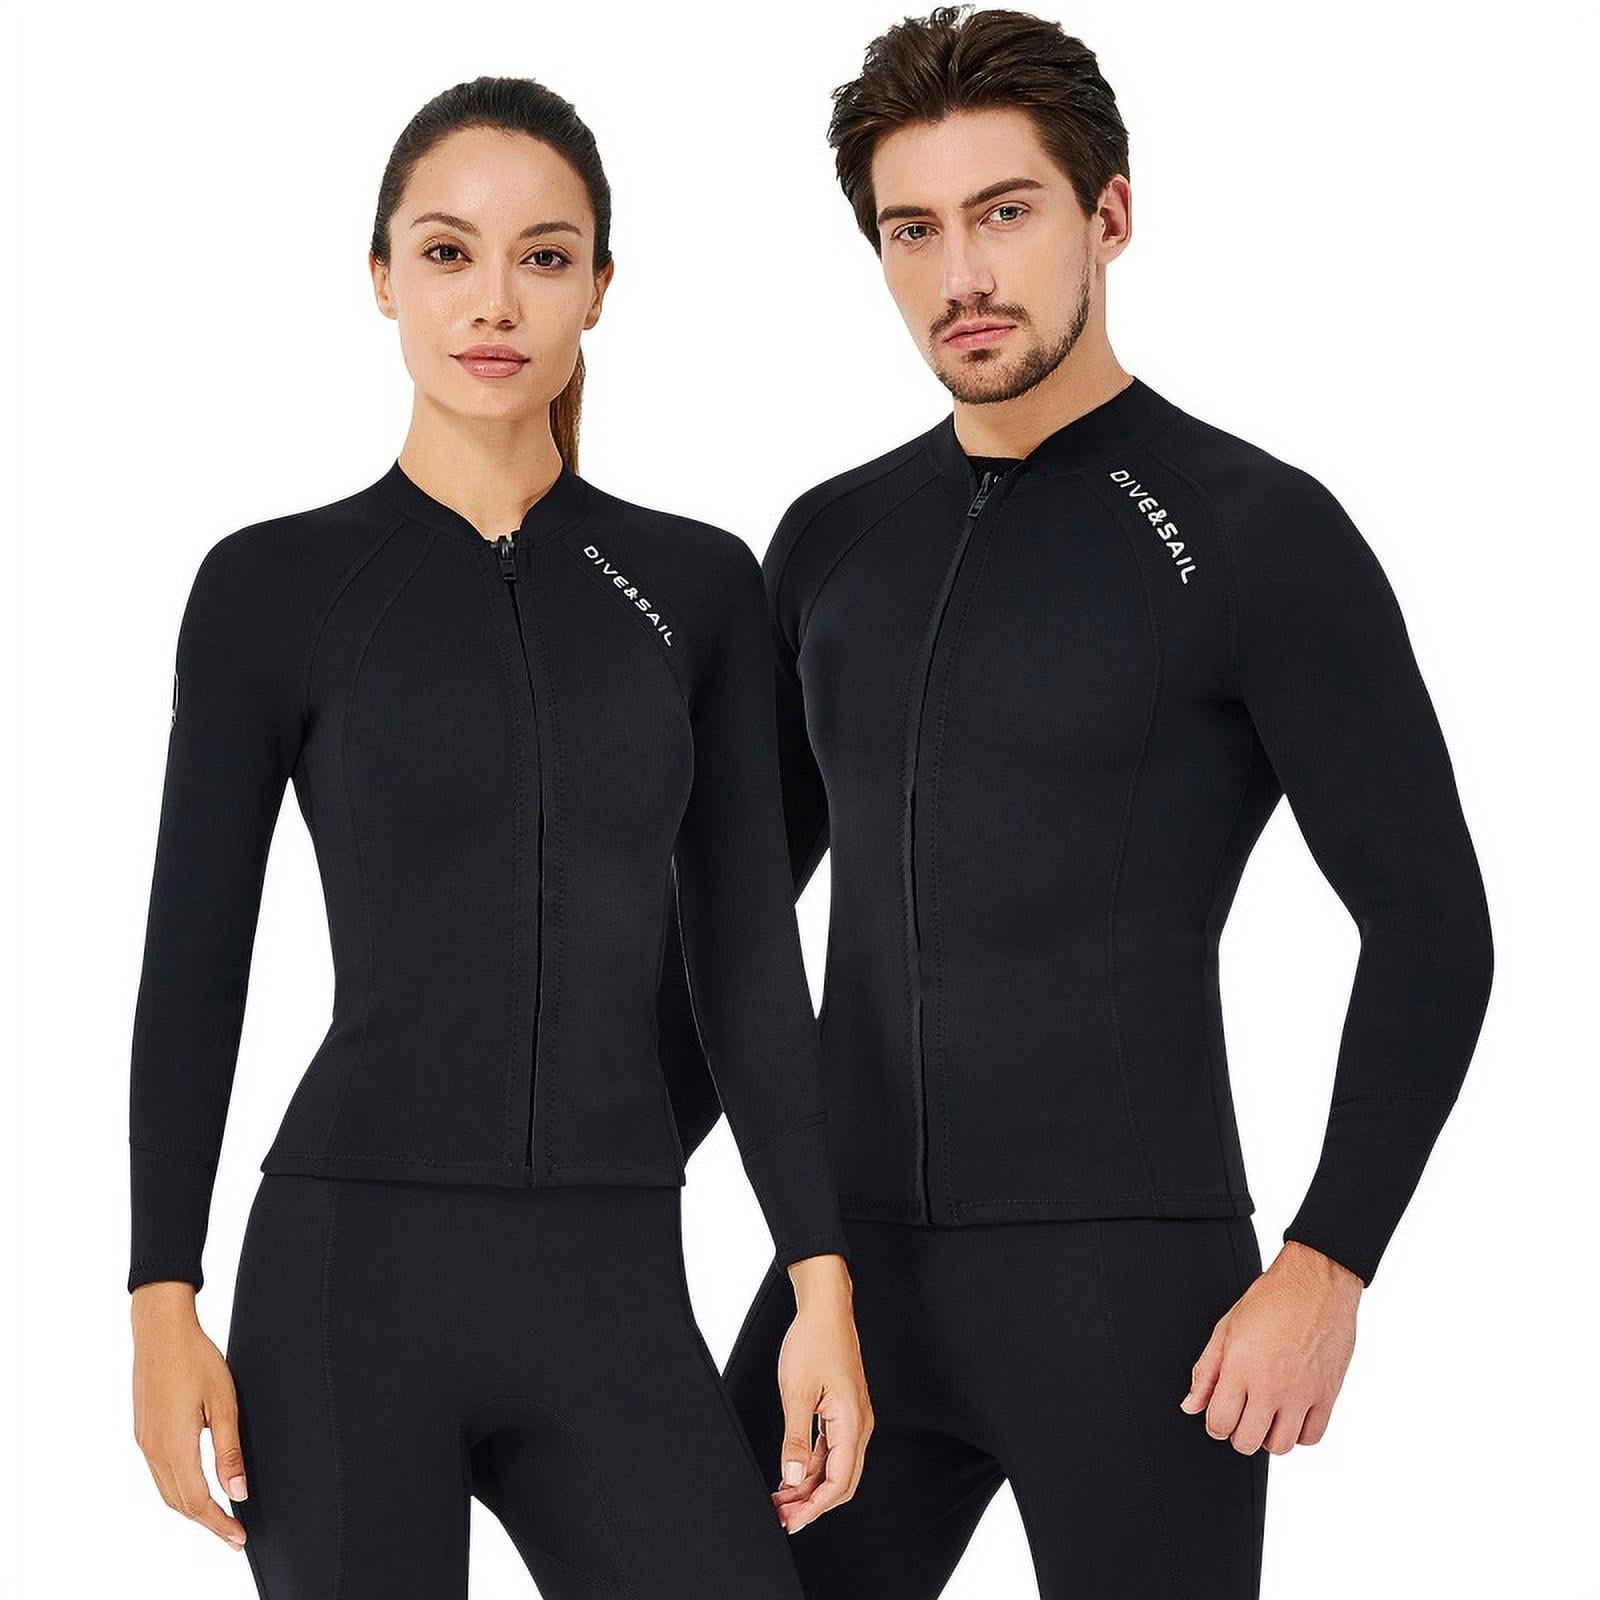 Women's Wetsuit Jacket Shirt Front Zip Wetsuit Top for Scuba Diving Swimming 